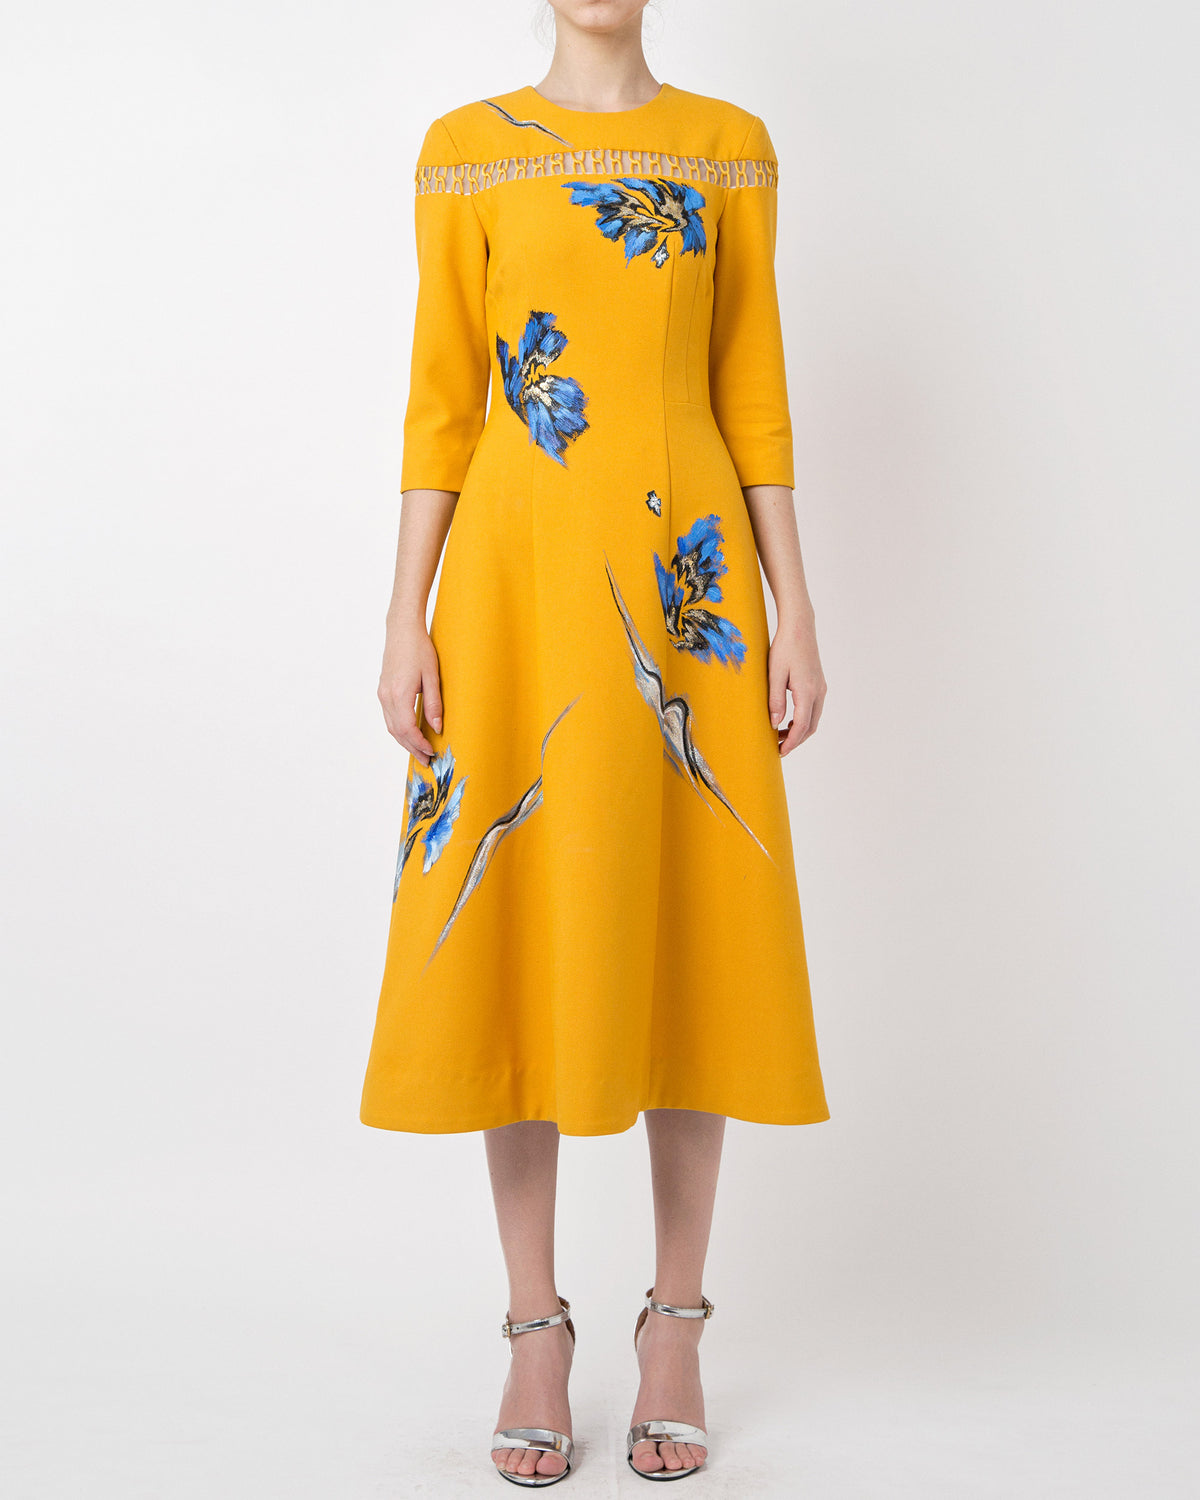 Poppy-painted mid-length sleeve Yellow midi dress